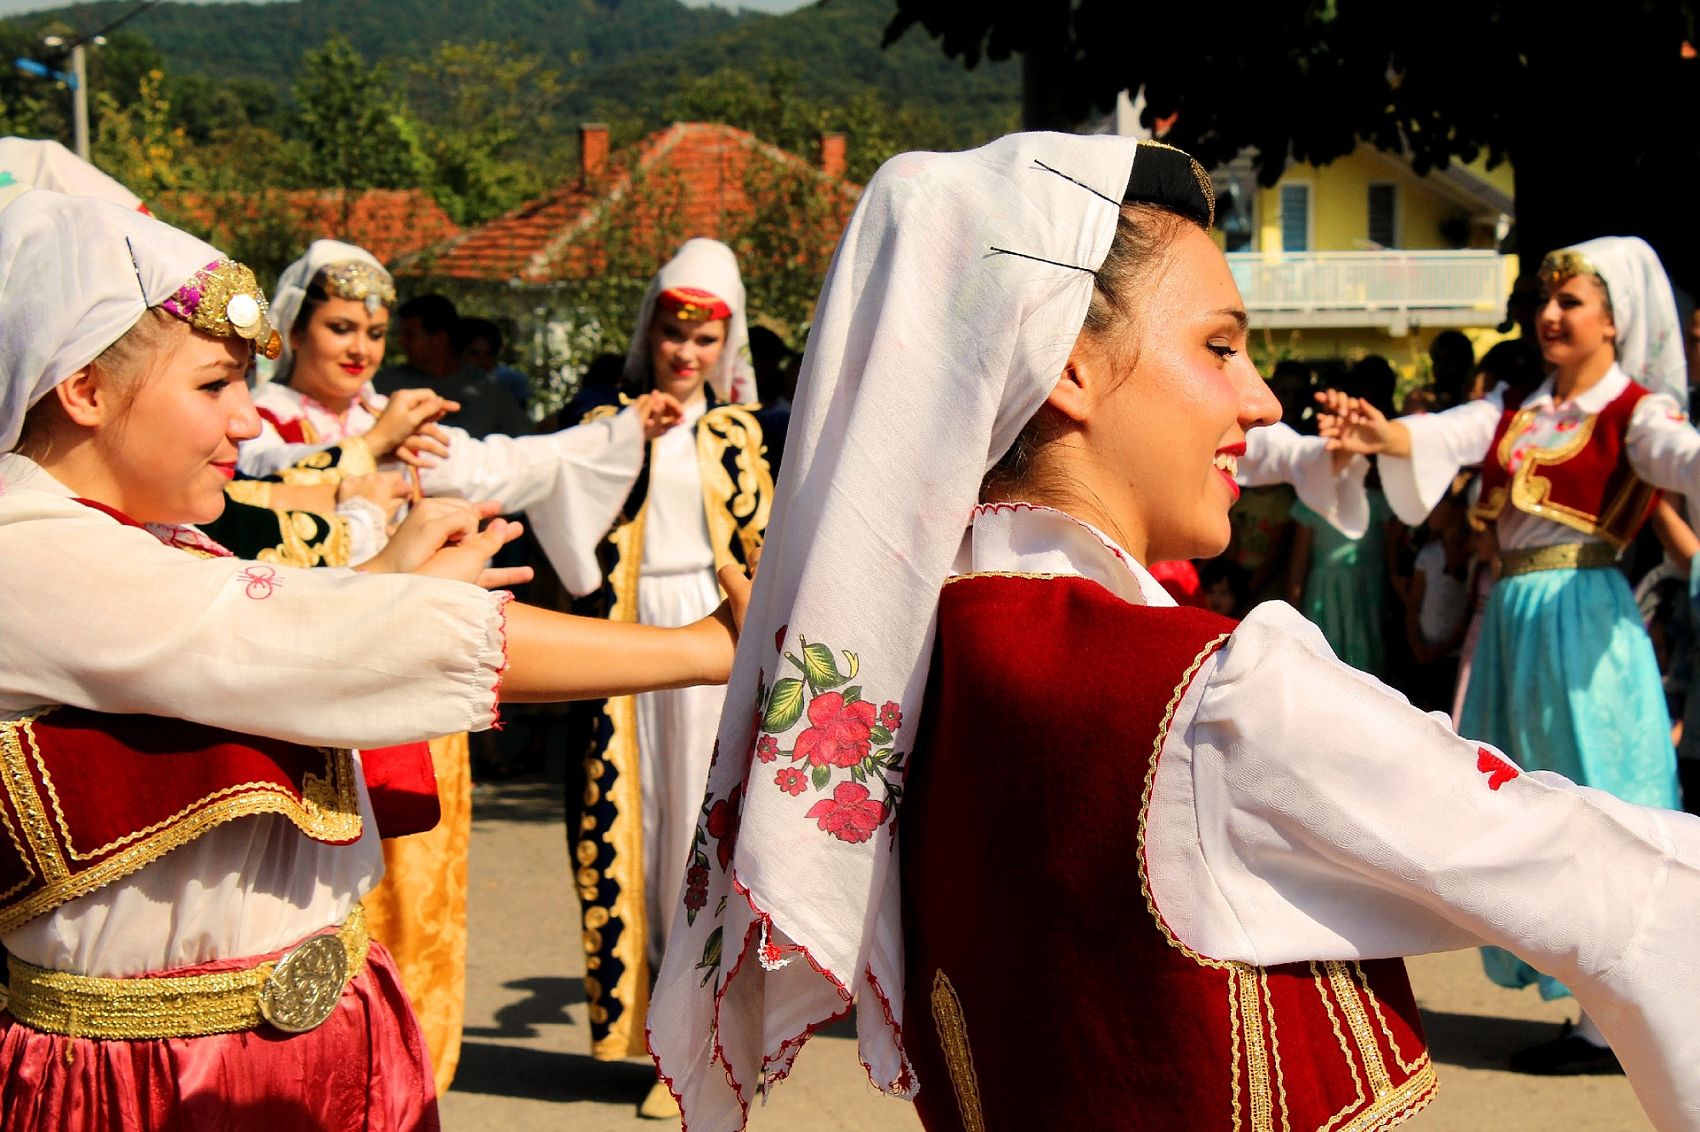 Beautifull girls dancing national dance  in Bosnia,Balkan